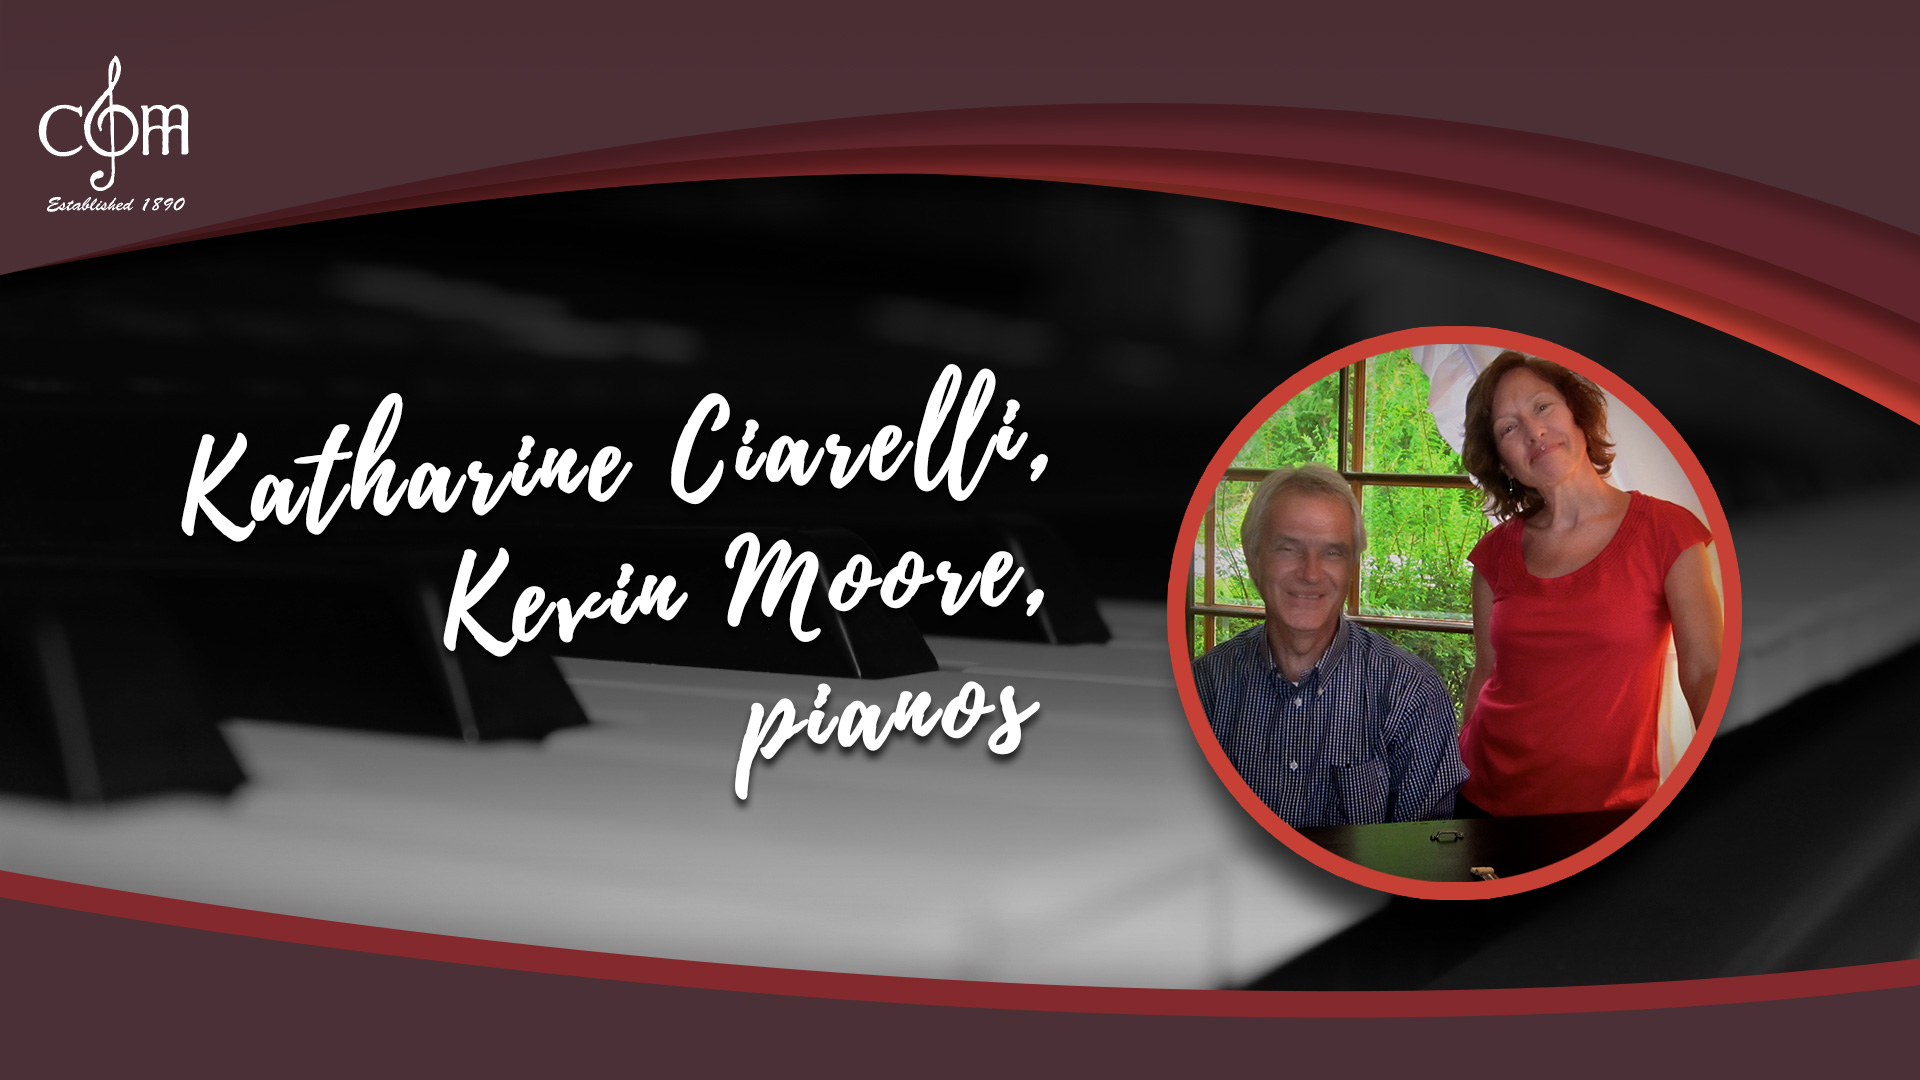 Katharine Ciarelli and Kevin Moore, pianos